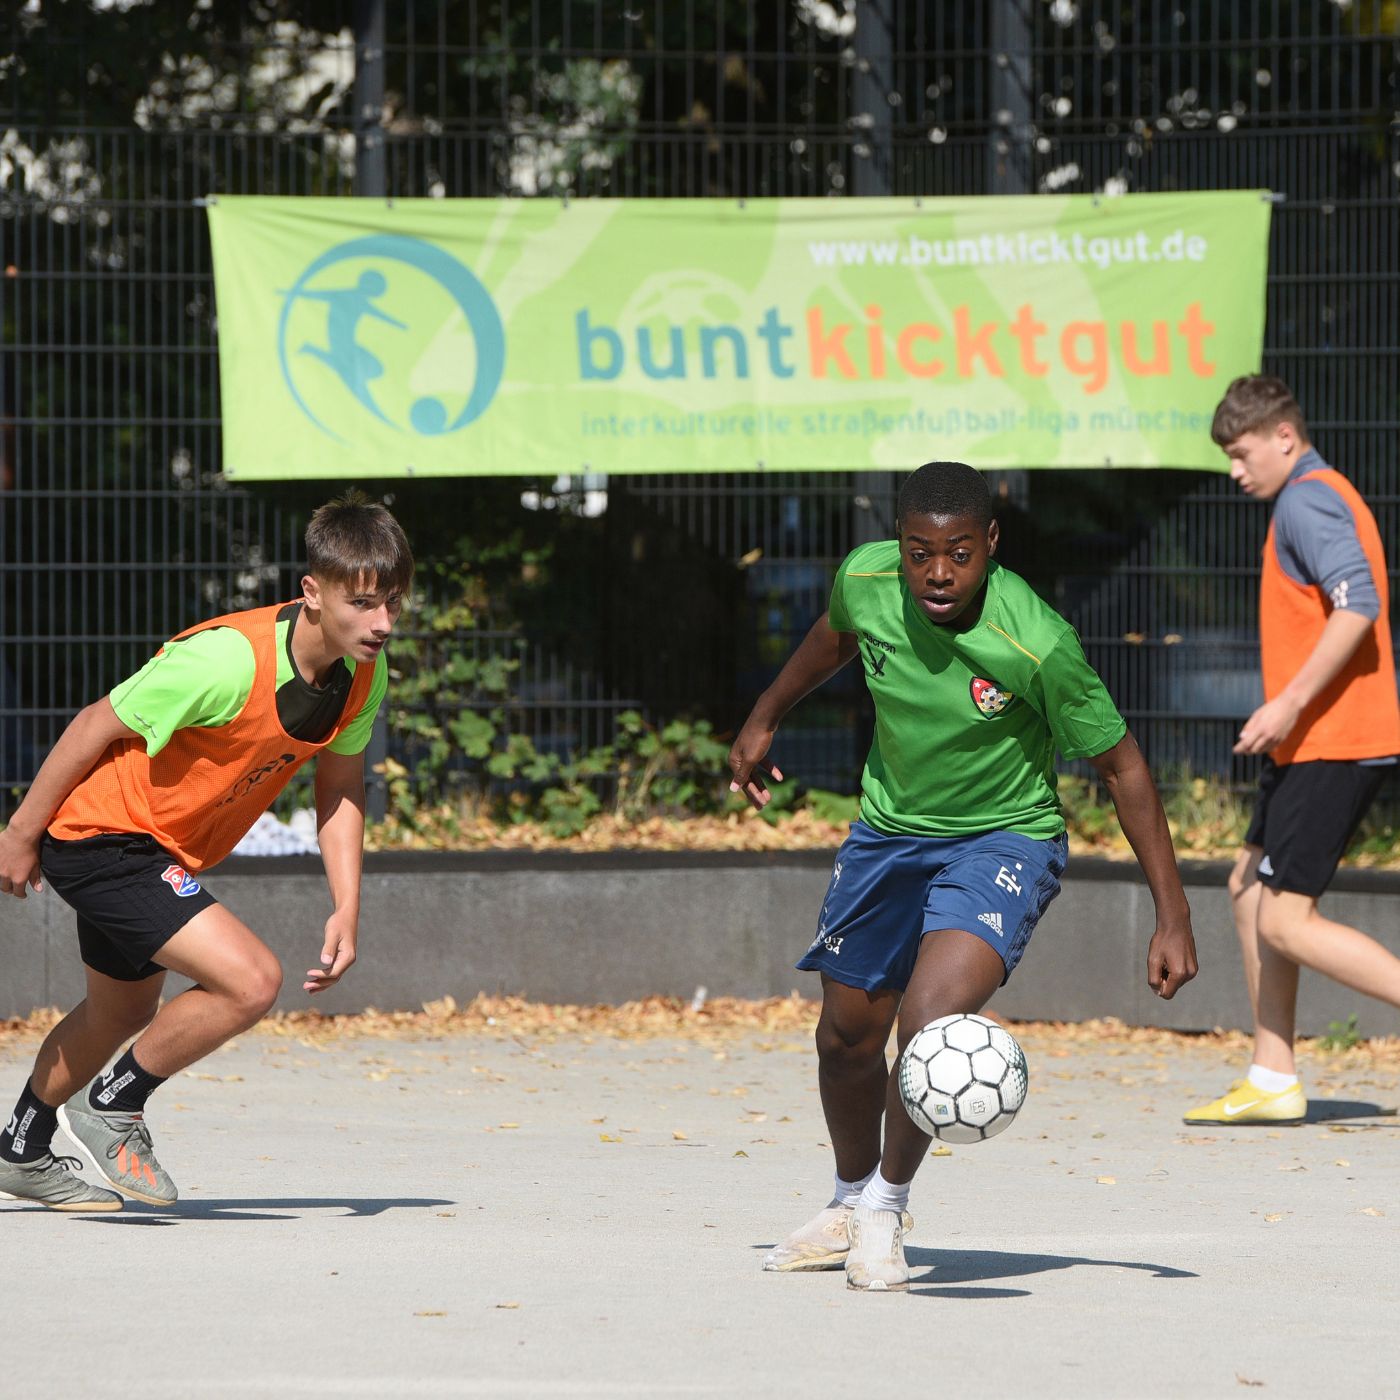 Streetfootball Workshops with buntkicktgut